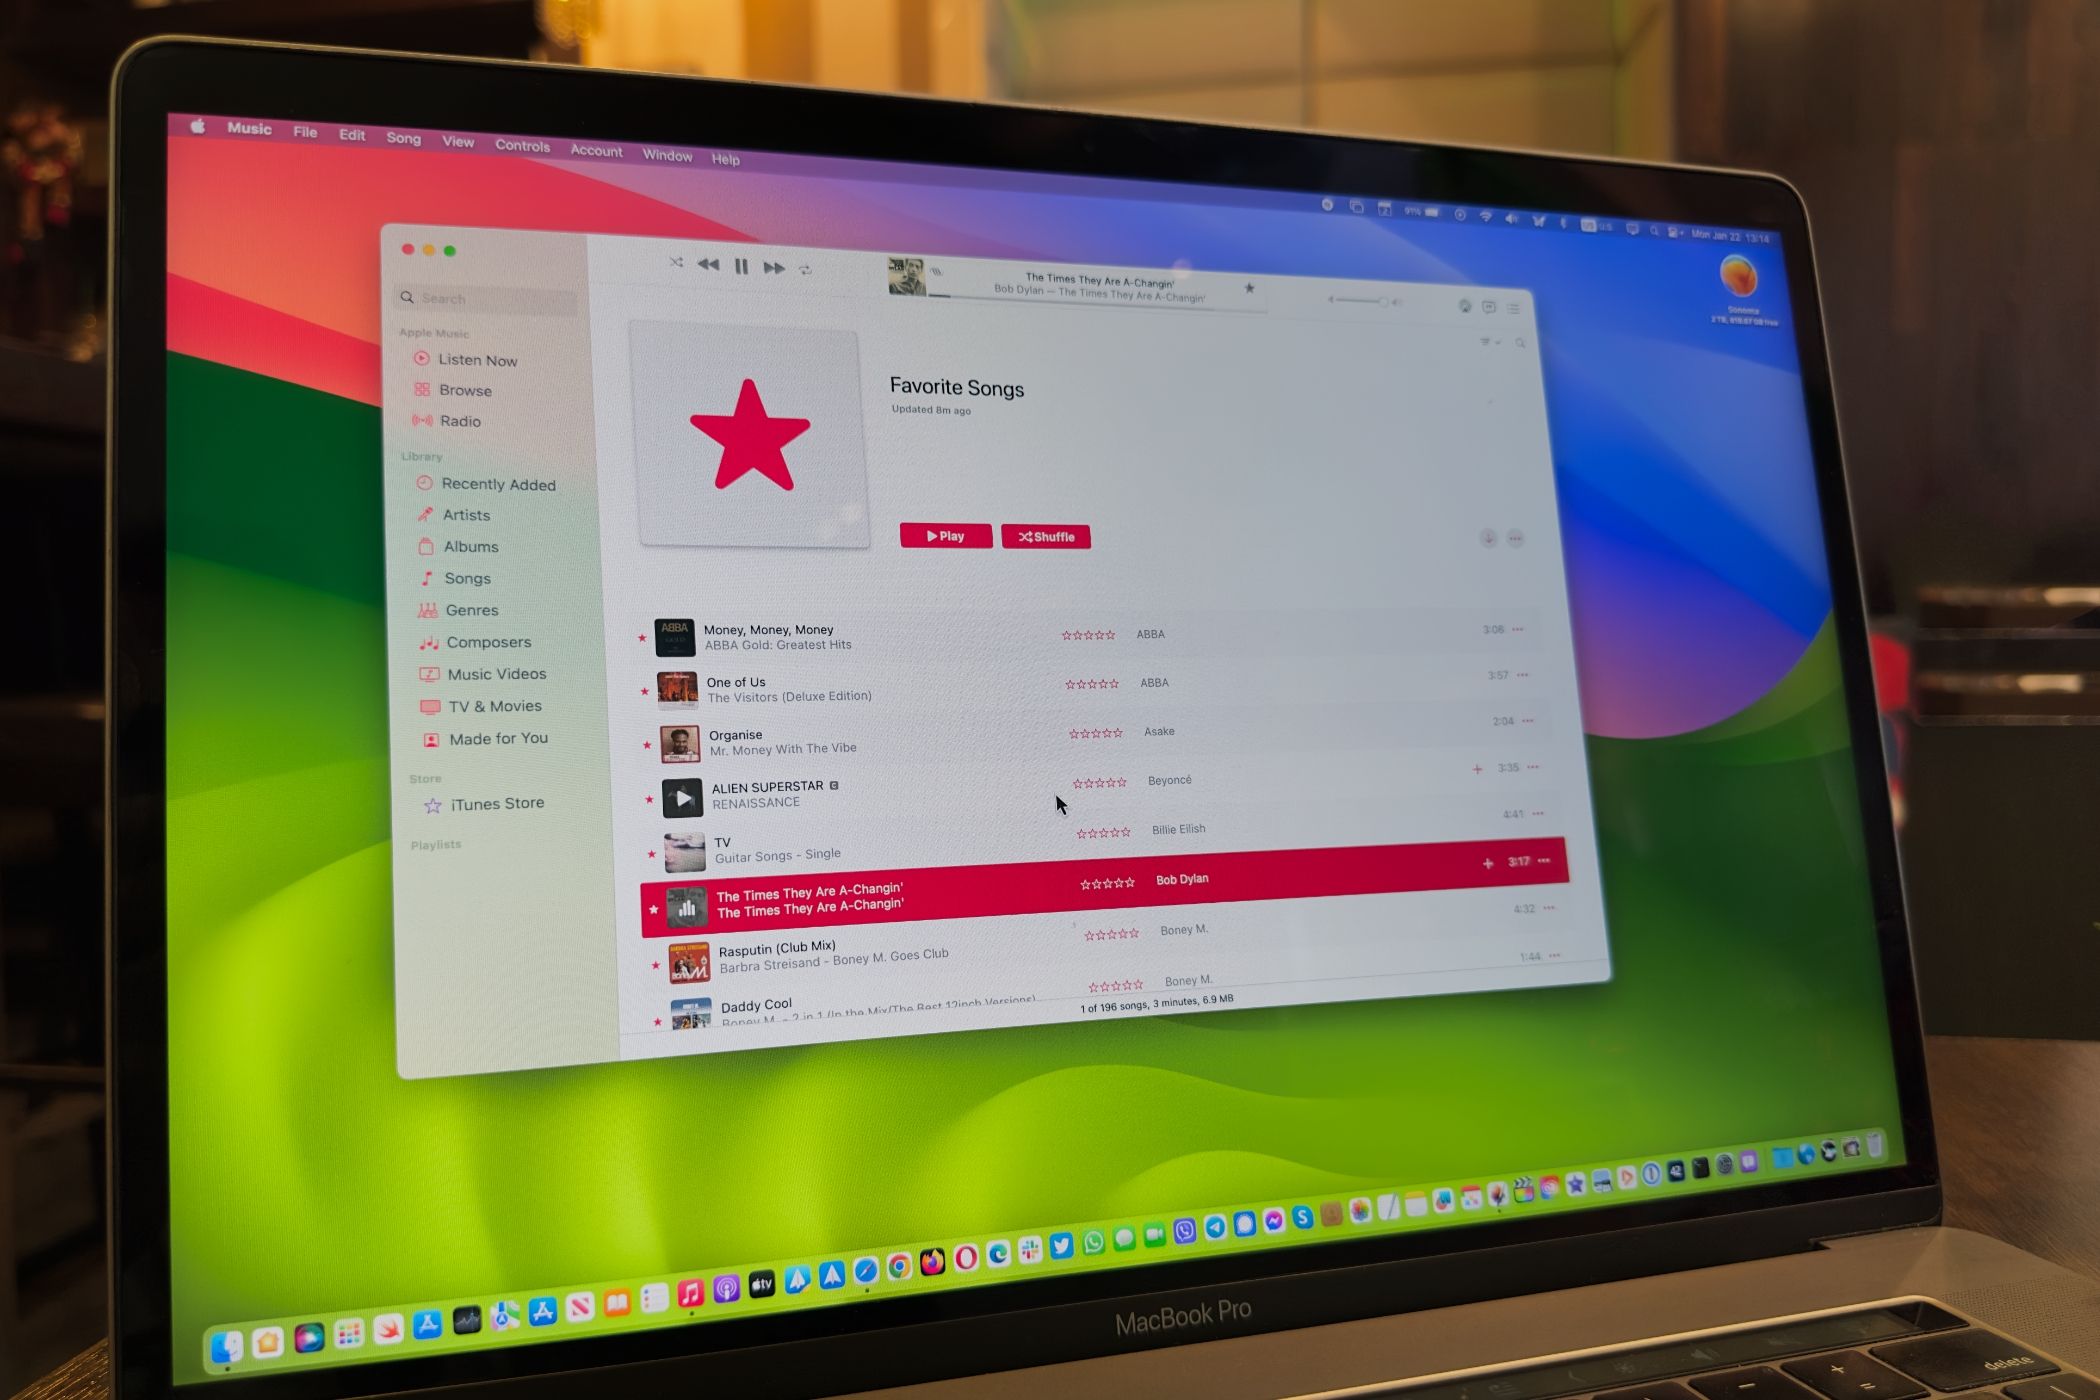 Music app on MacBook Pro showcasing the Favorite Songs playlist.